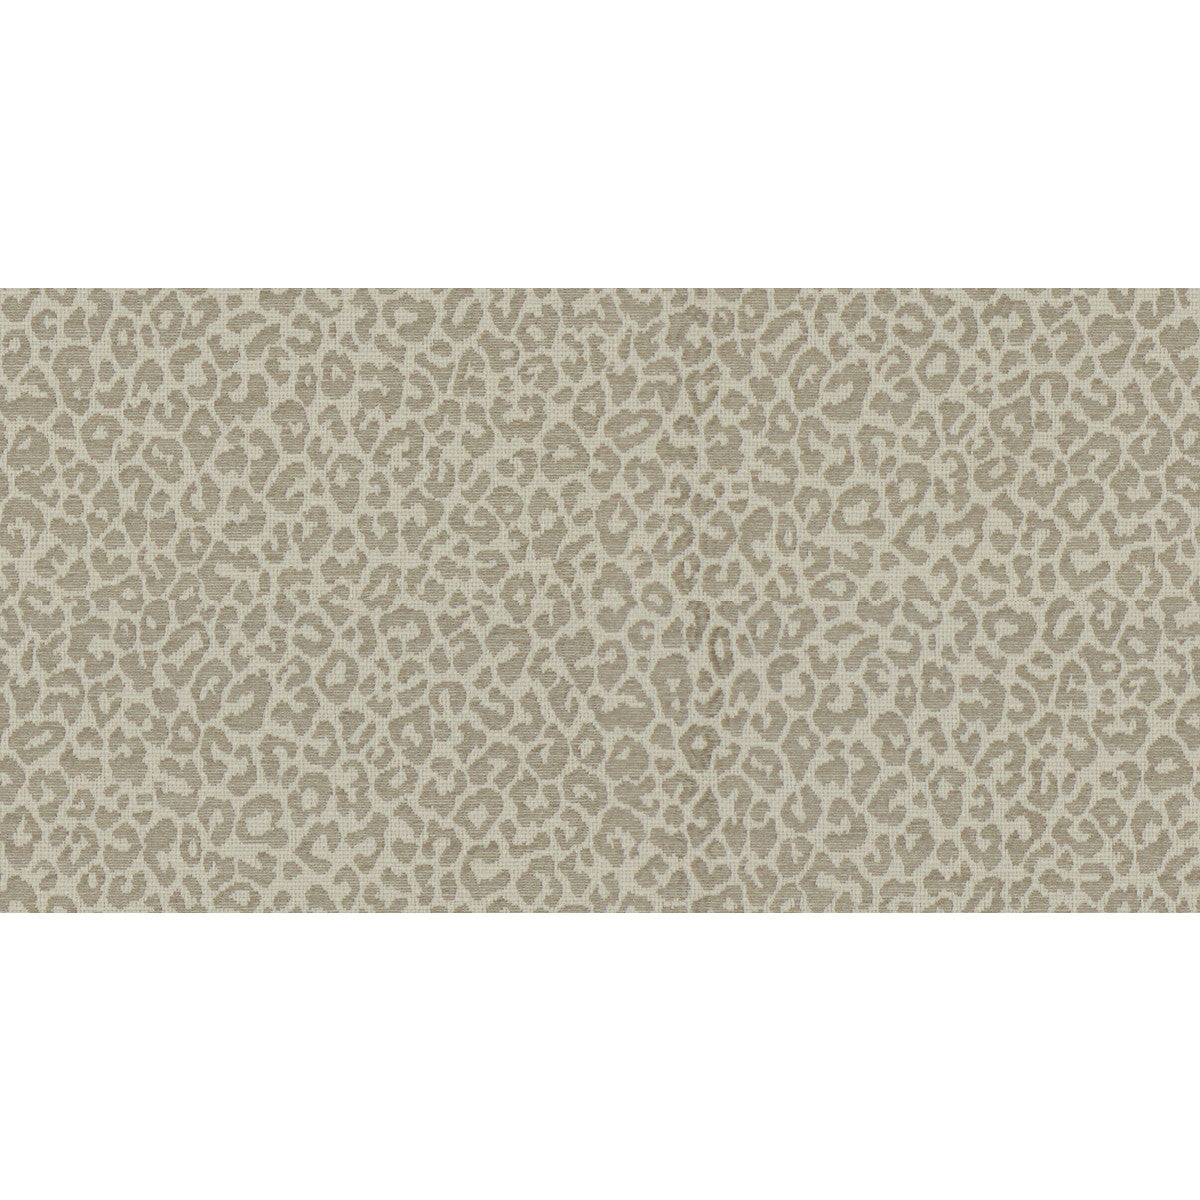 Kravet Smart fabric in 34310-1611 color - pattern 34310.1611.0 - by Kravet Smart